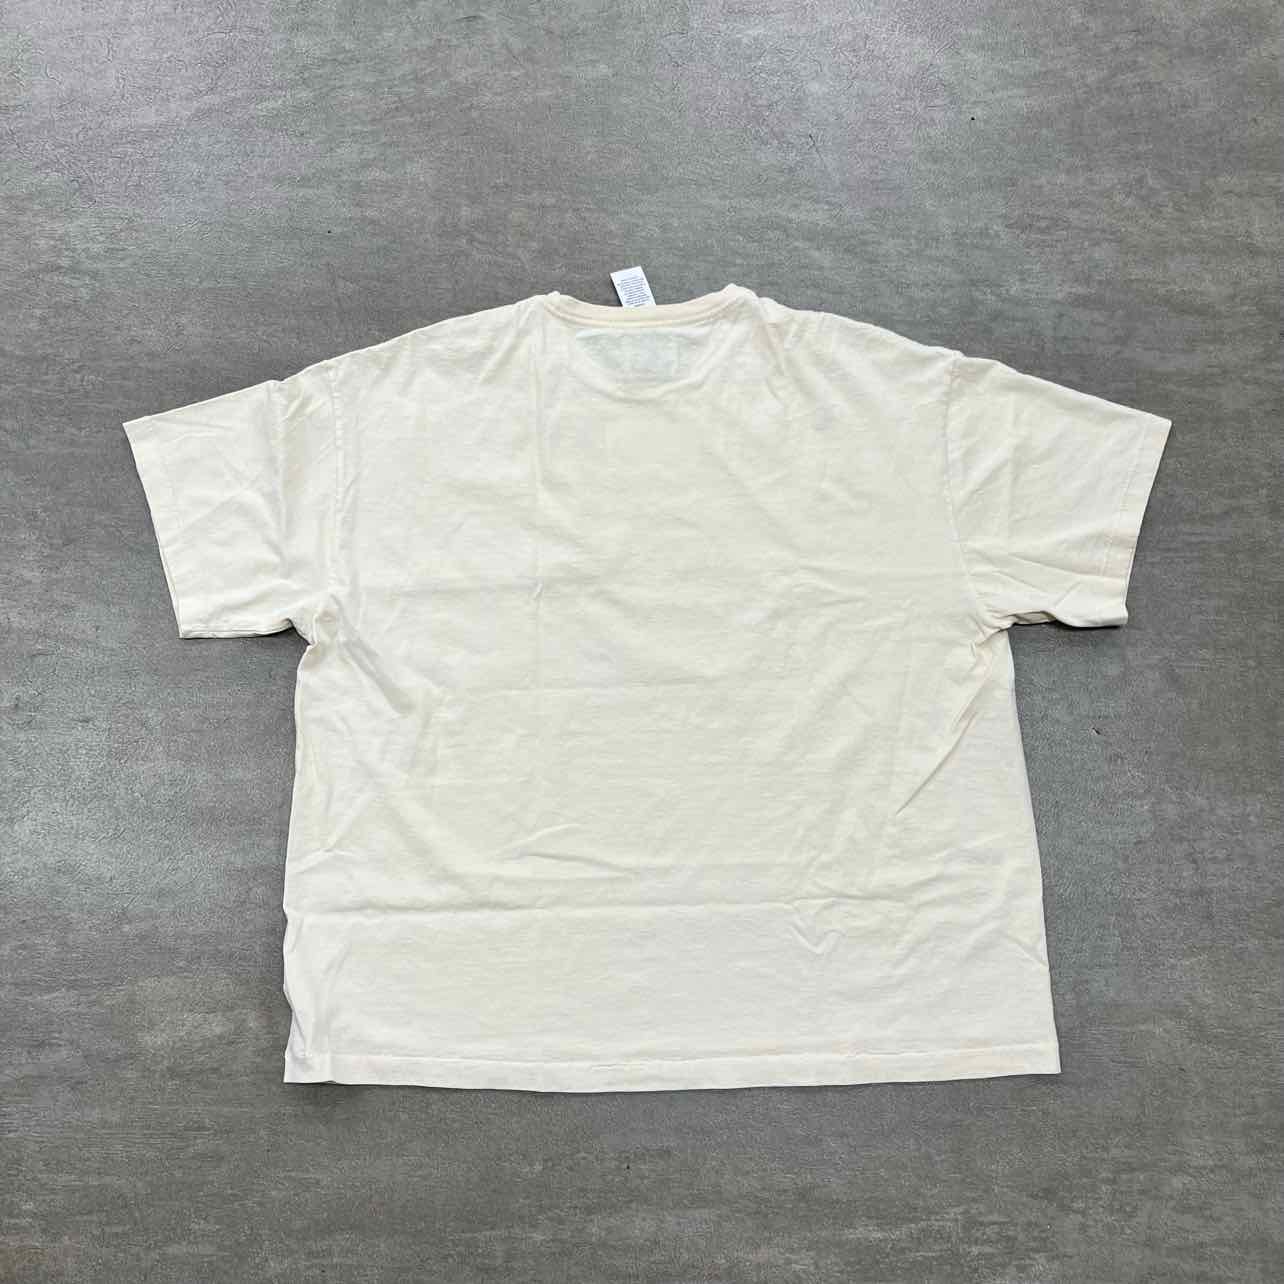 Gallery DEPT. T-Shirt "POCKET LOGO" Cream New Size XL